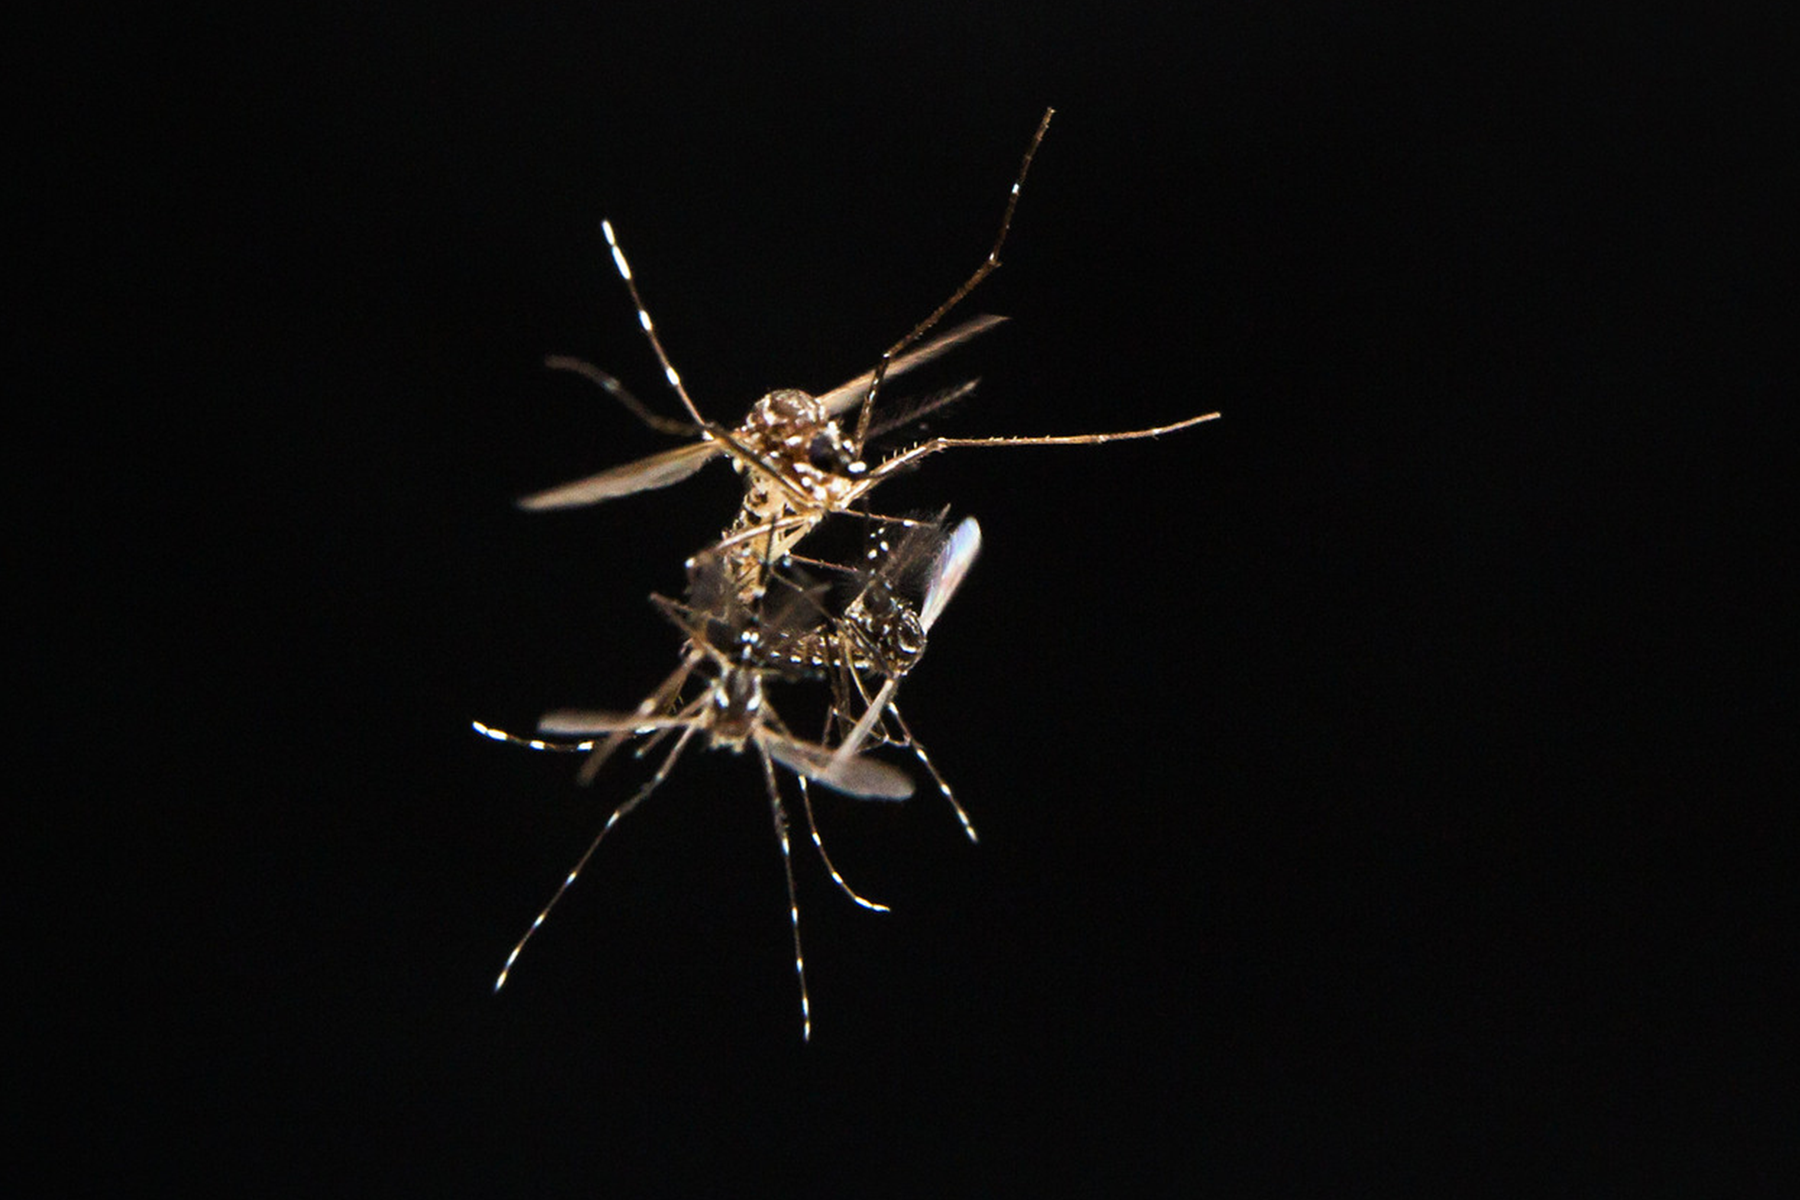 An Aedes aegypti